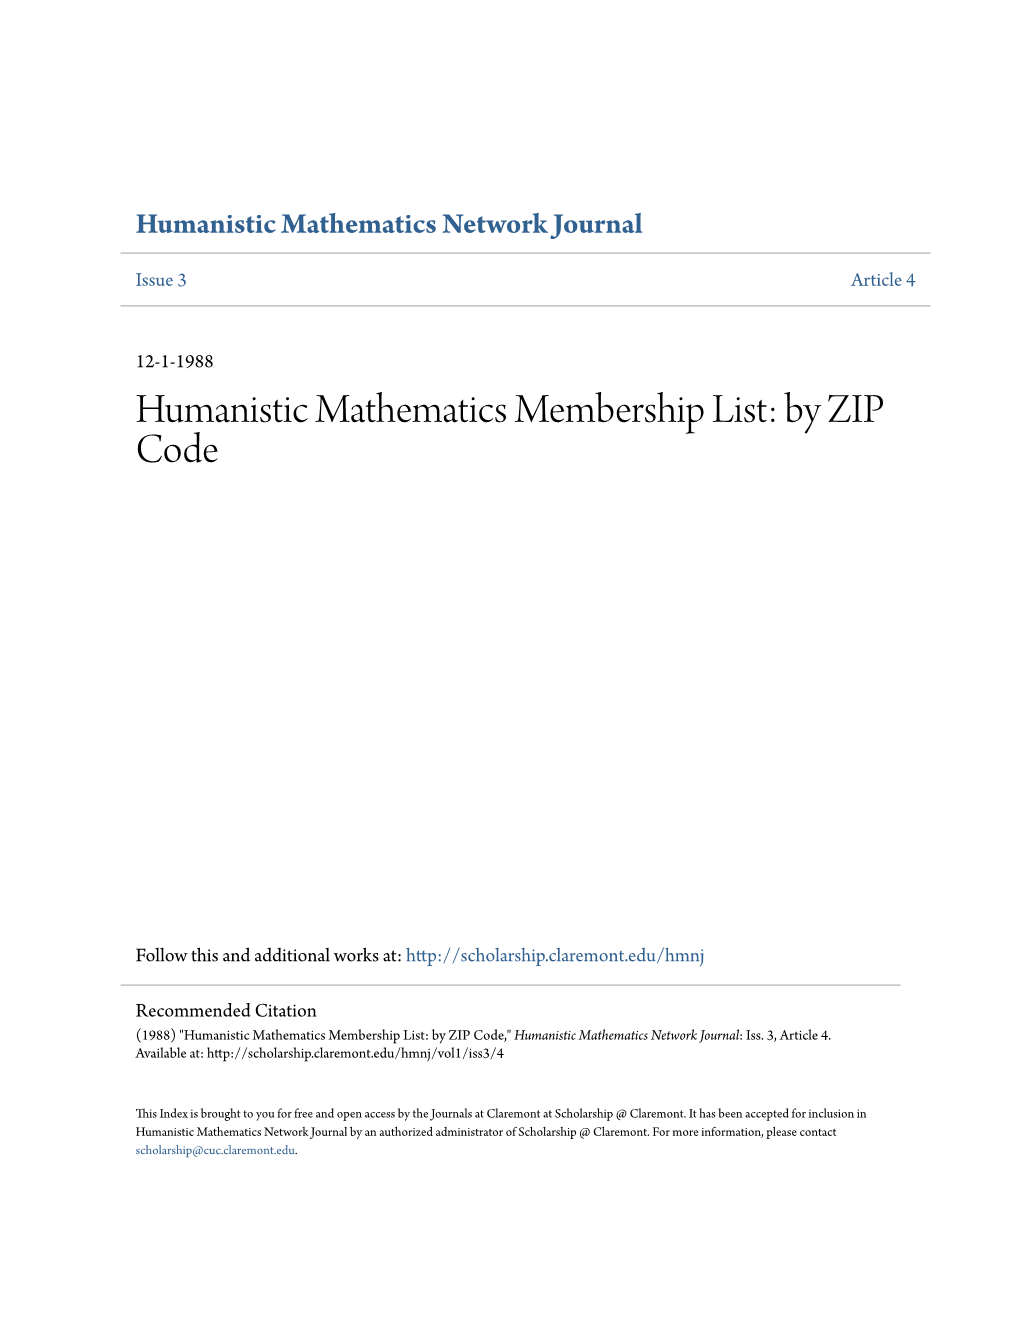 Humanistic Mathematics Membership List: by ZIP Code